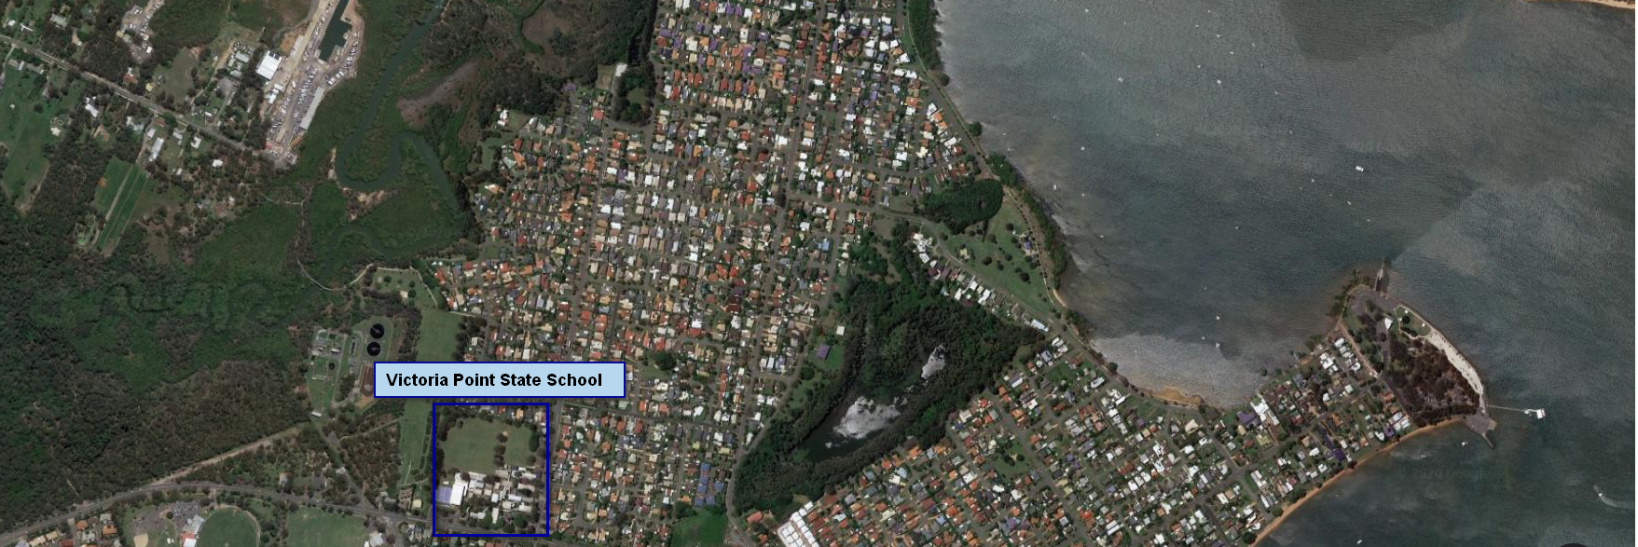 google map of school.png